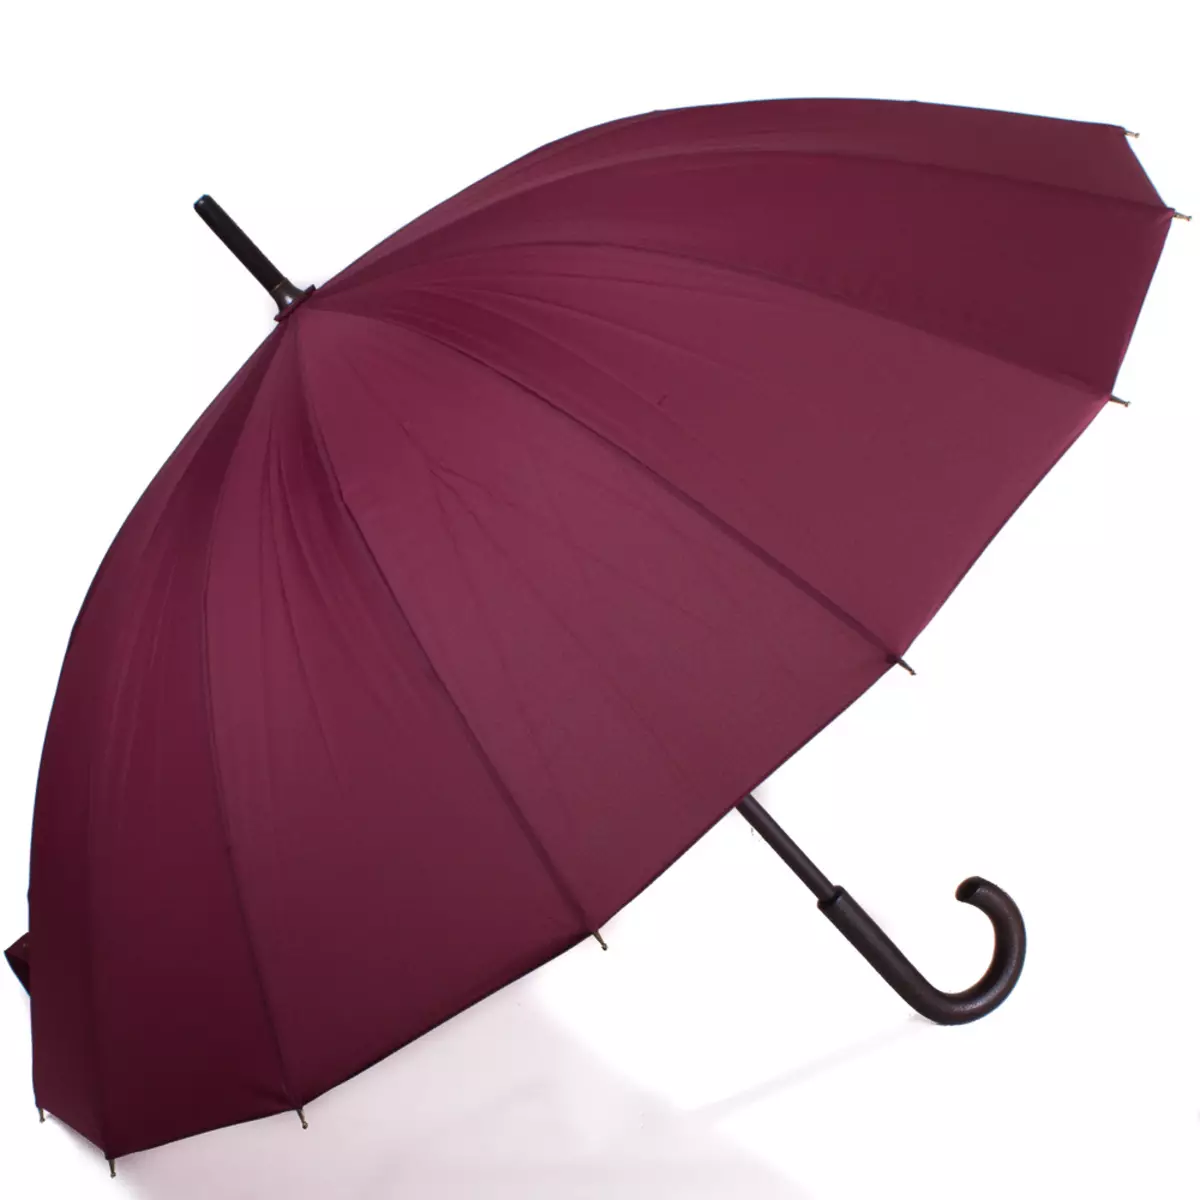 Doppler Umbrellas (60 fotos): Modelos femeninos Cane y plegado, Doppler Reviews 15227_16